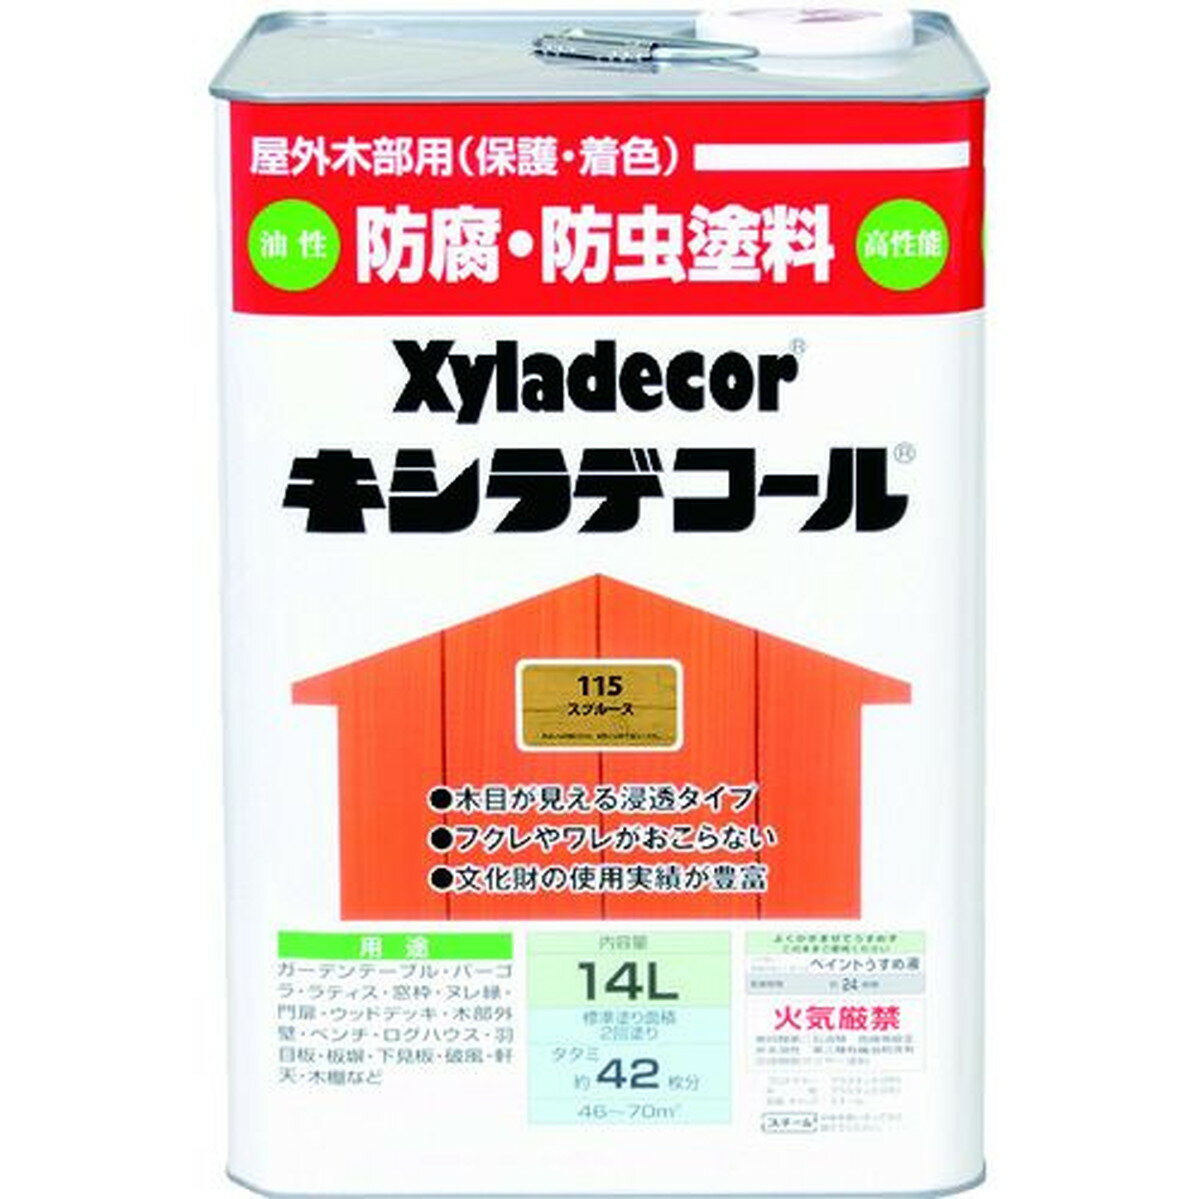 KANSAI キシラデコール スプルース 14L 1缶 (00017670750000)